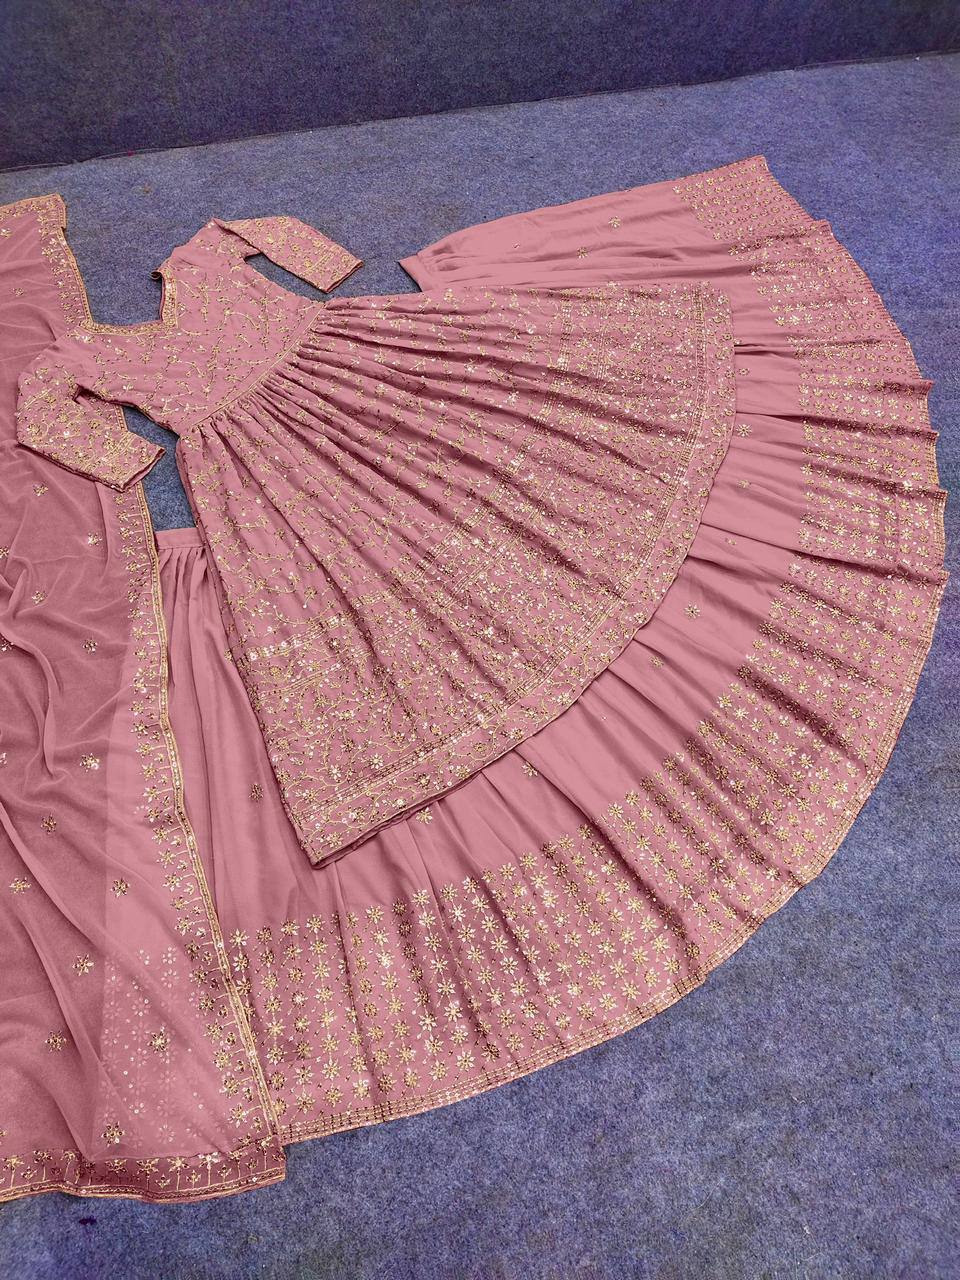 Buy Trendy Pink Lehenga Choli Online in India